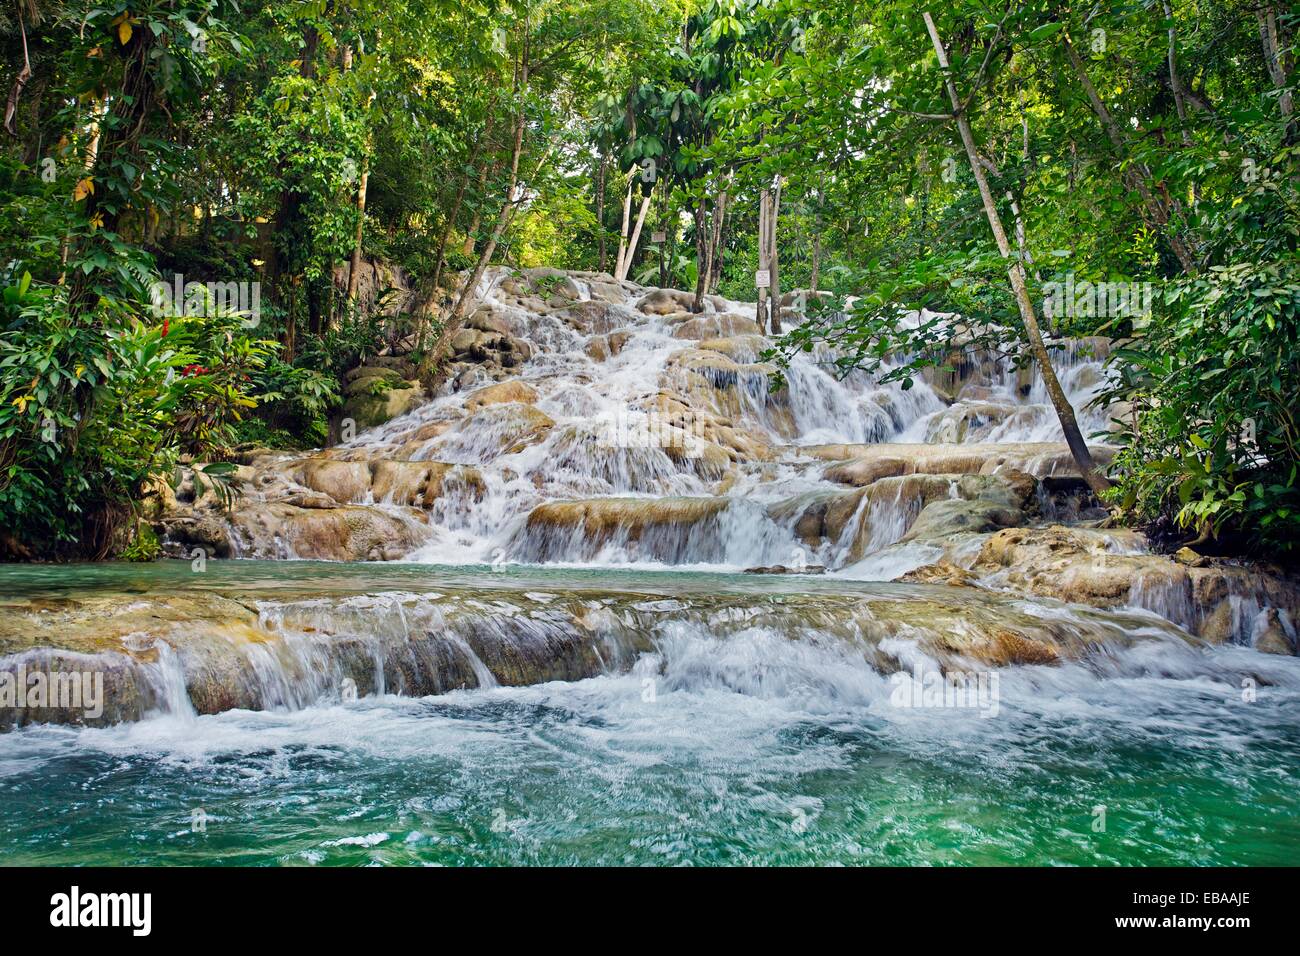 Dunns River Falls Cascate del Fiume Dunn Ocho Rios Giamaica West Indies  Caraibi America centrale Foto stock - Alamy